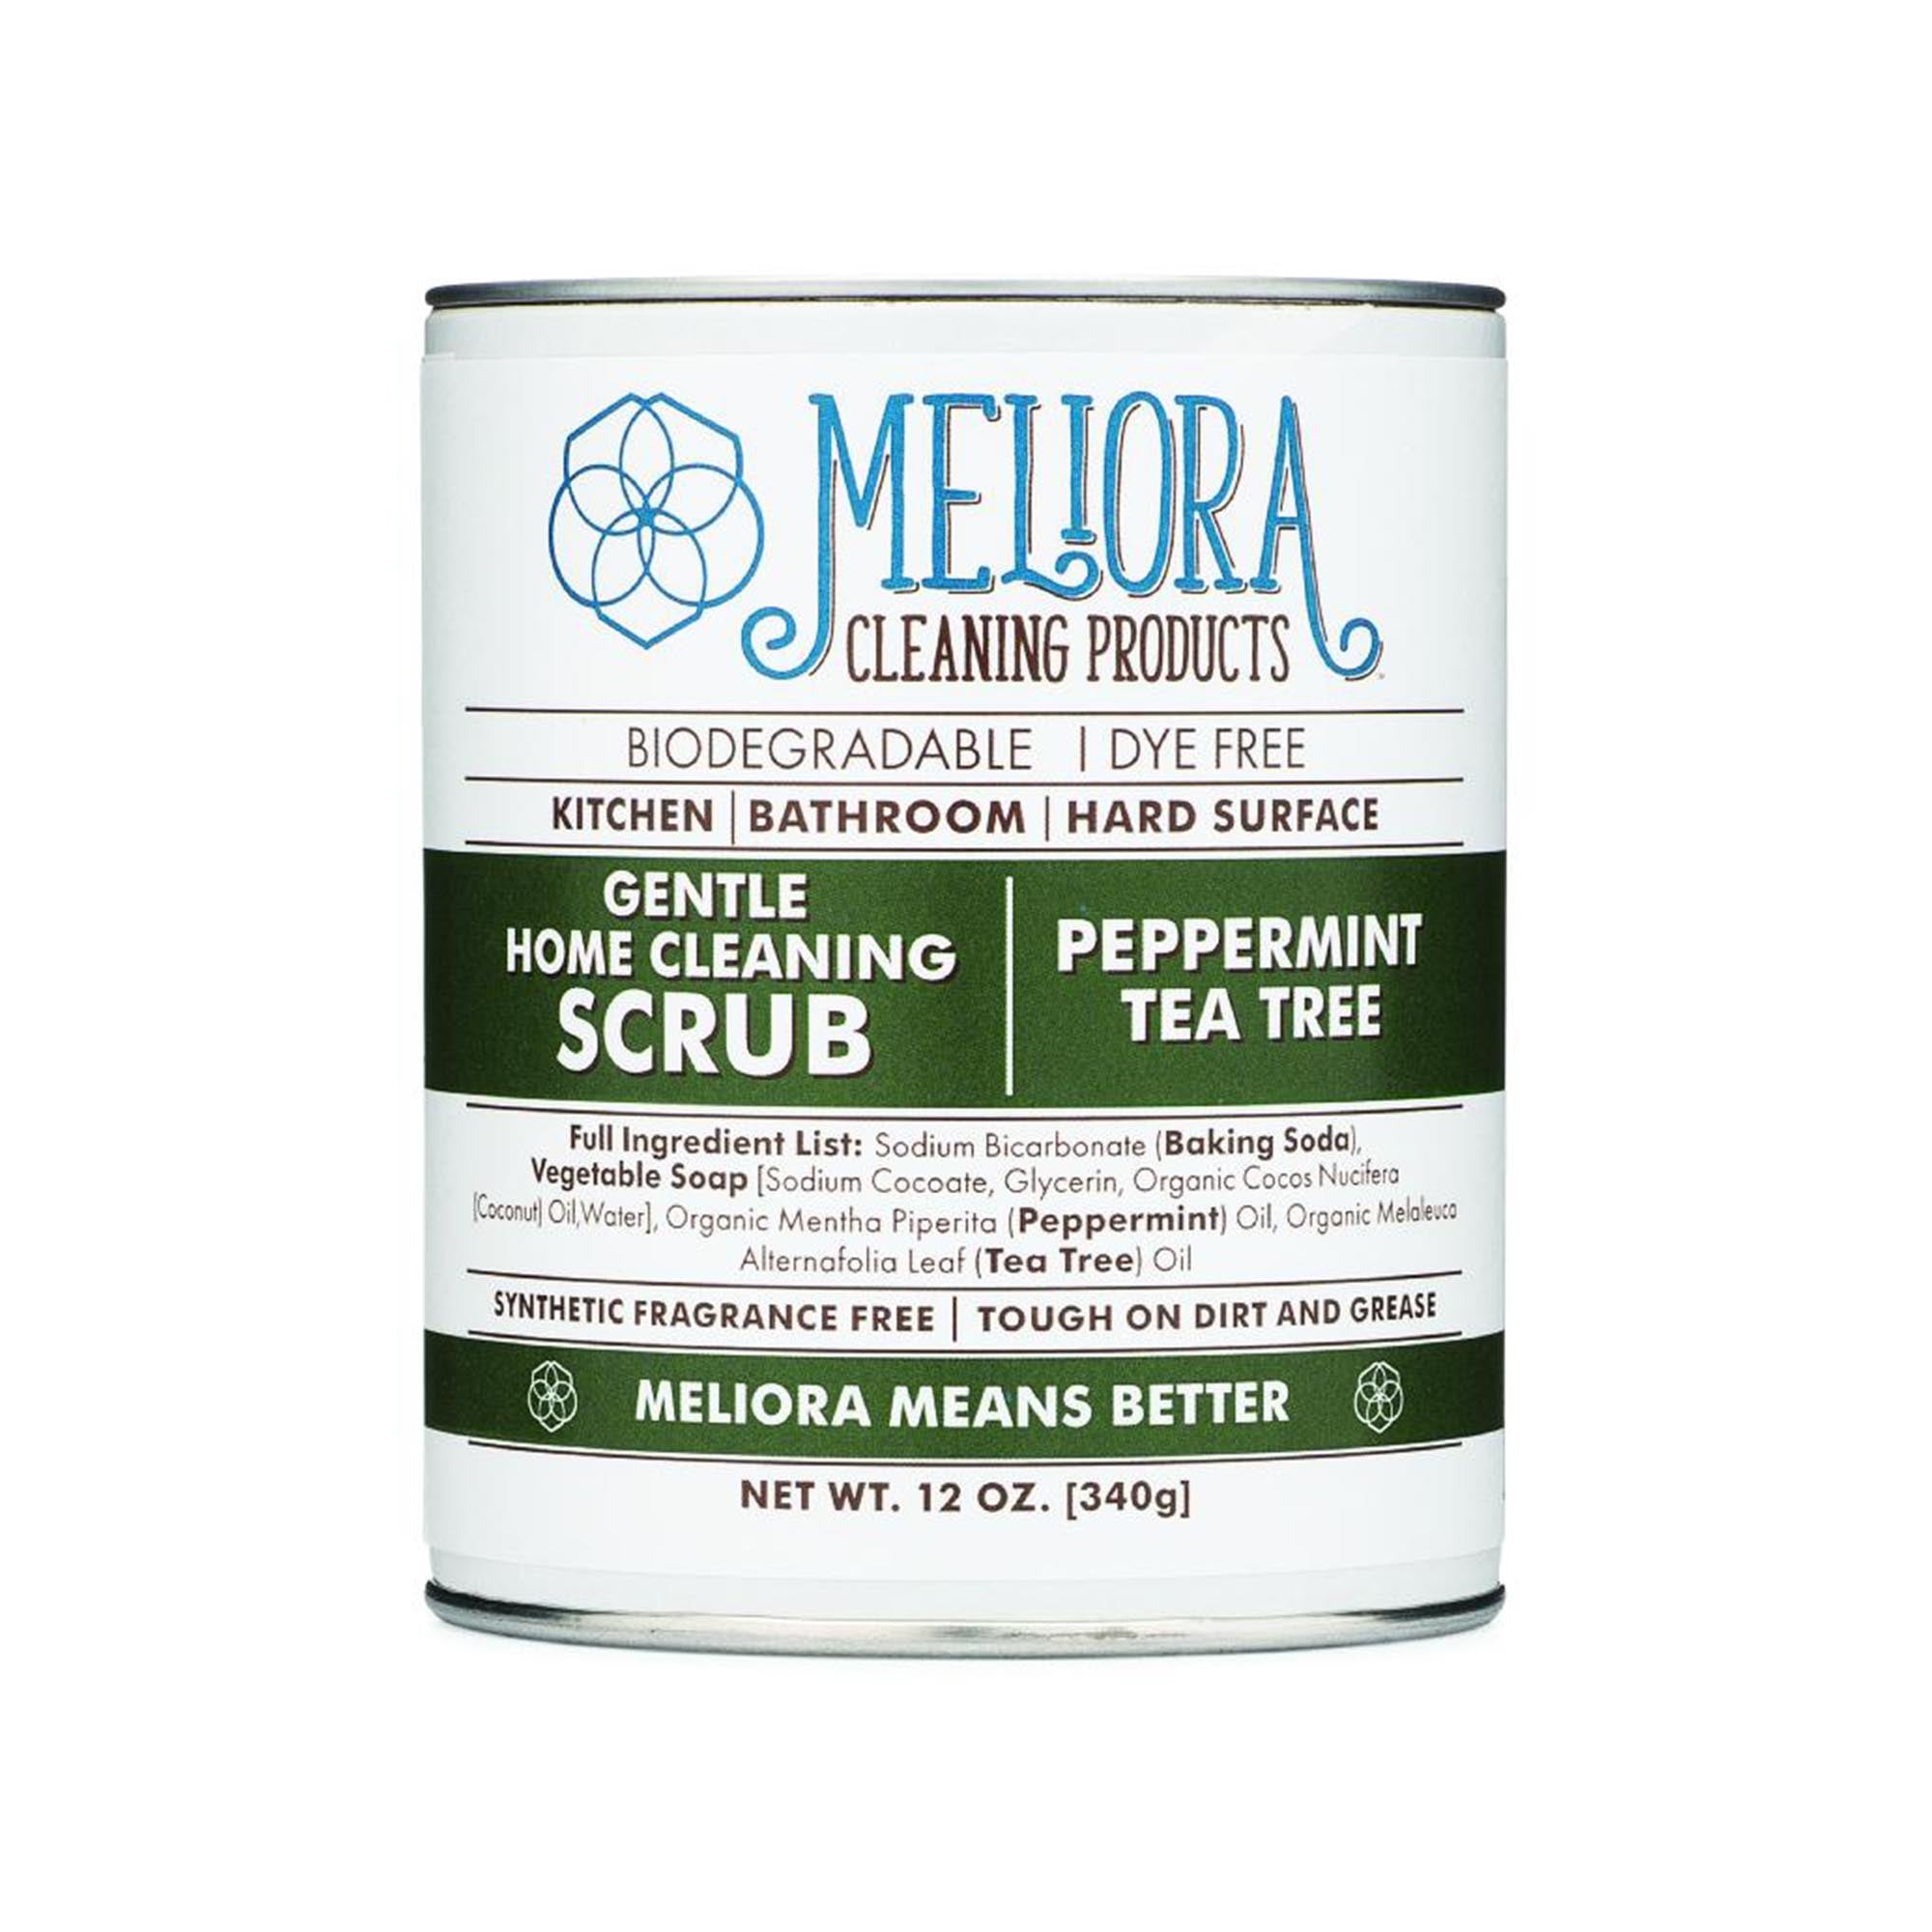 12 oz meliora cleaning scrub can, peppermint tea tree green